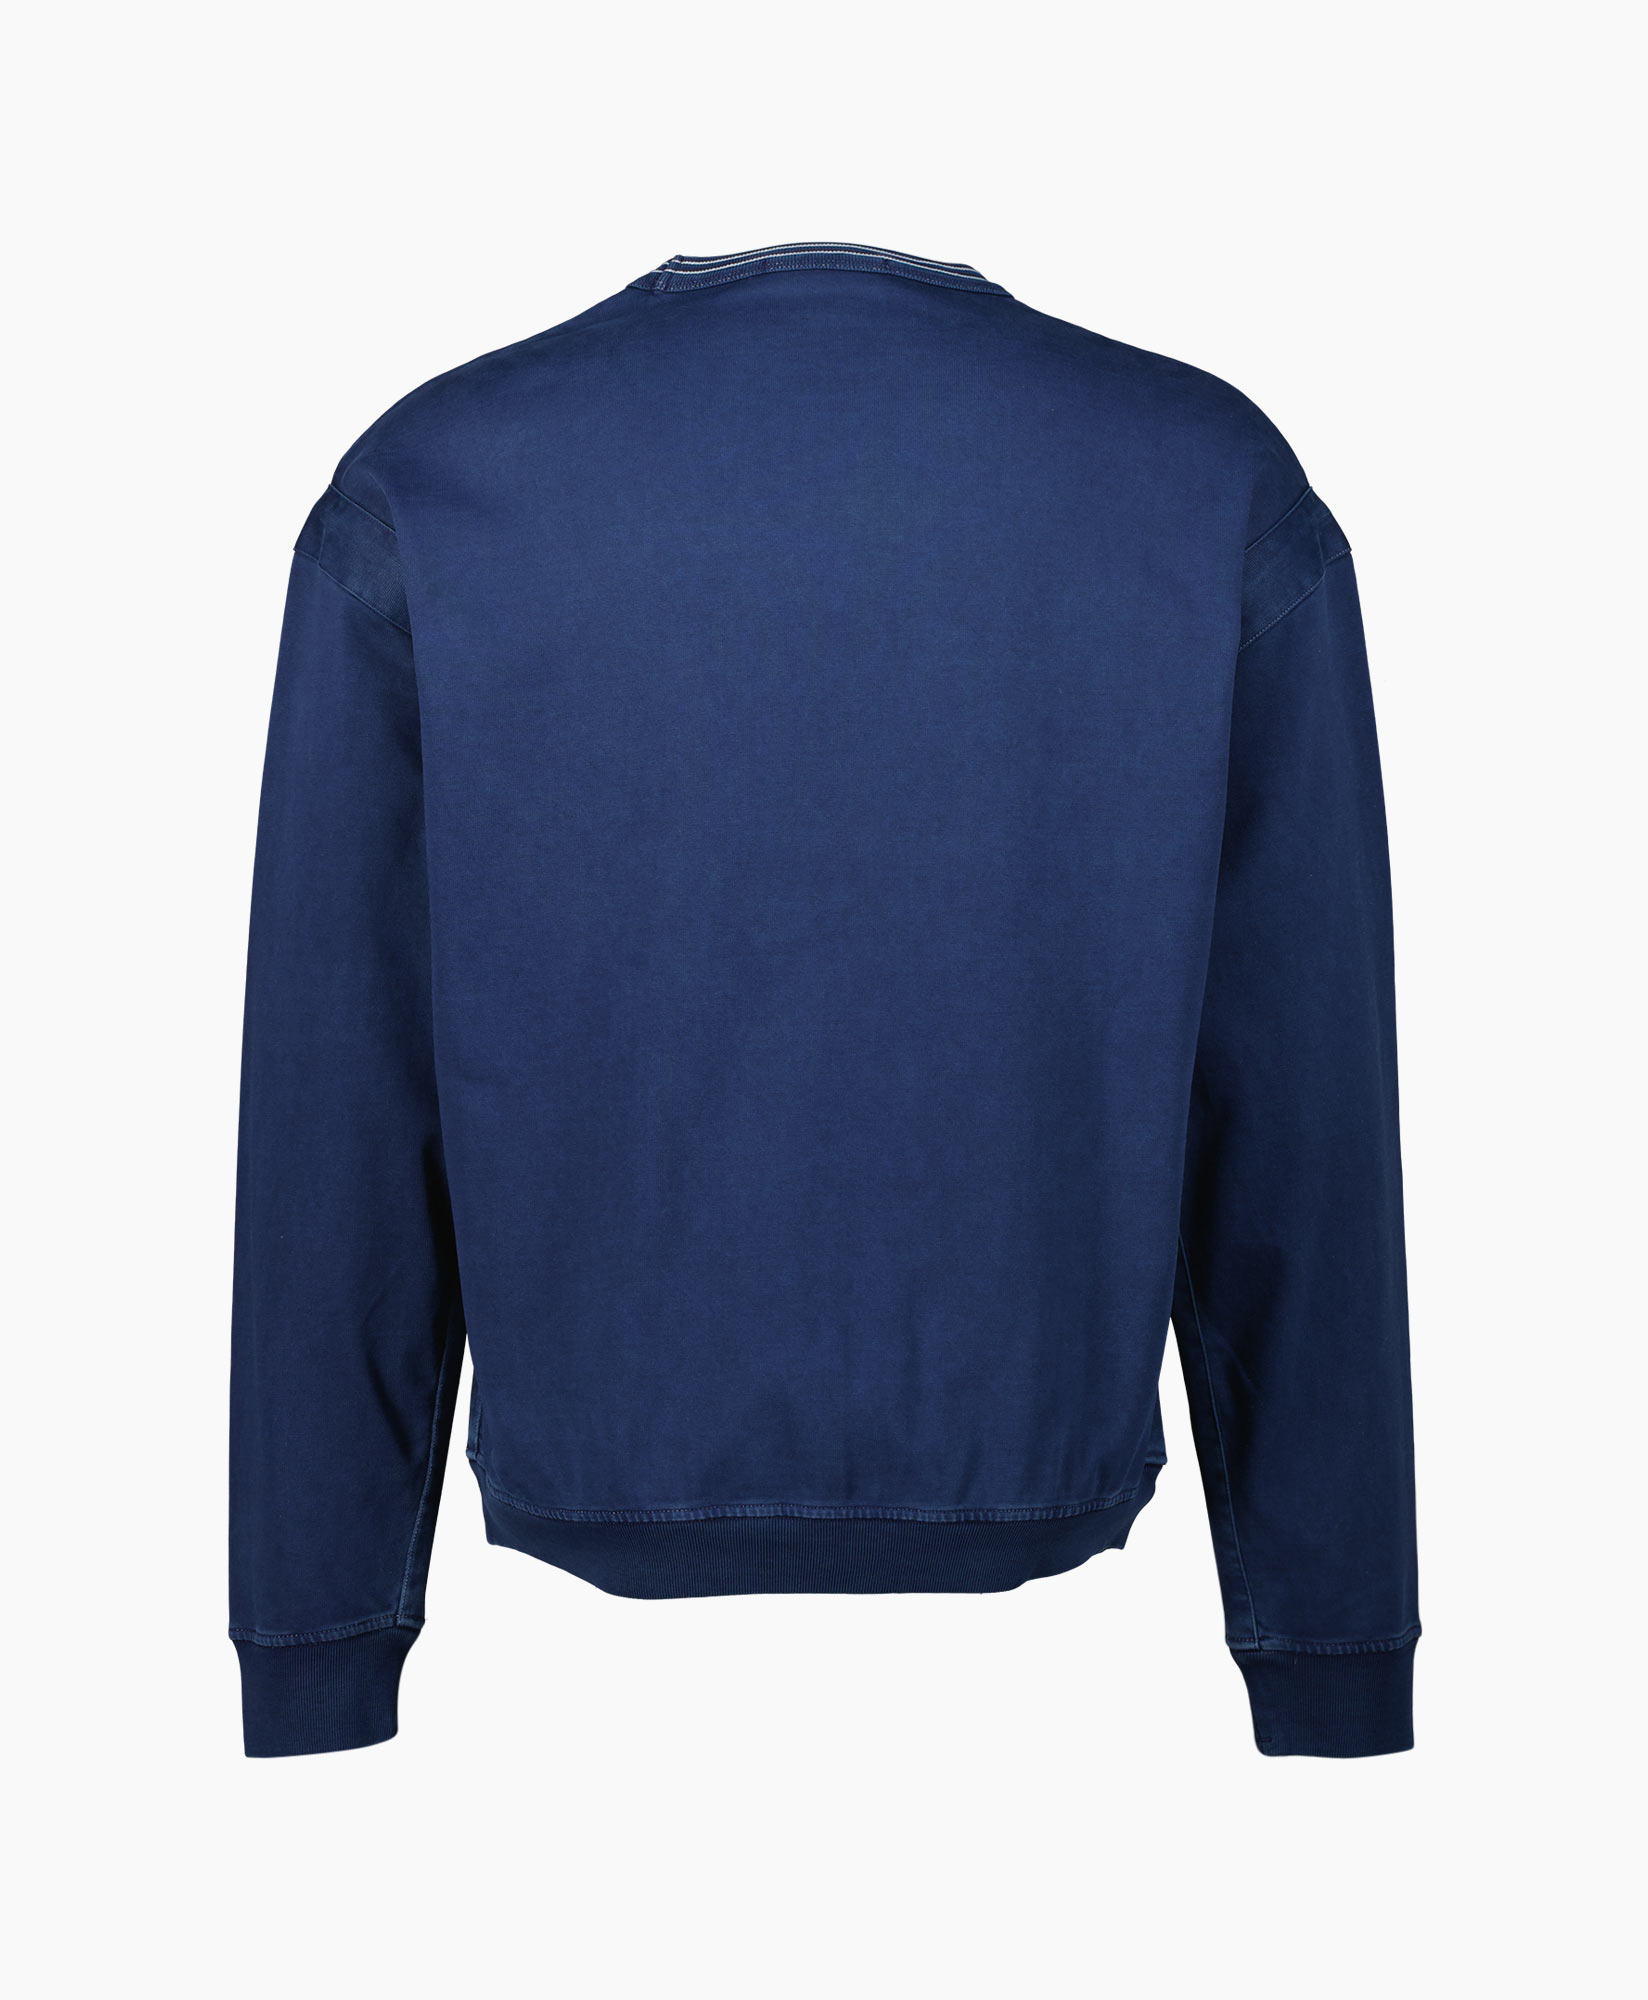 Sweater 614x2 Marina Donker Blauw